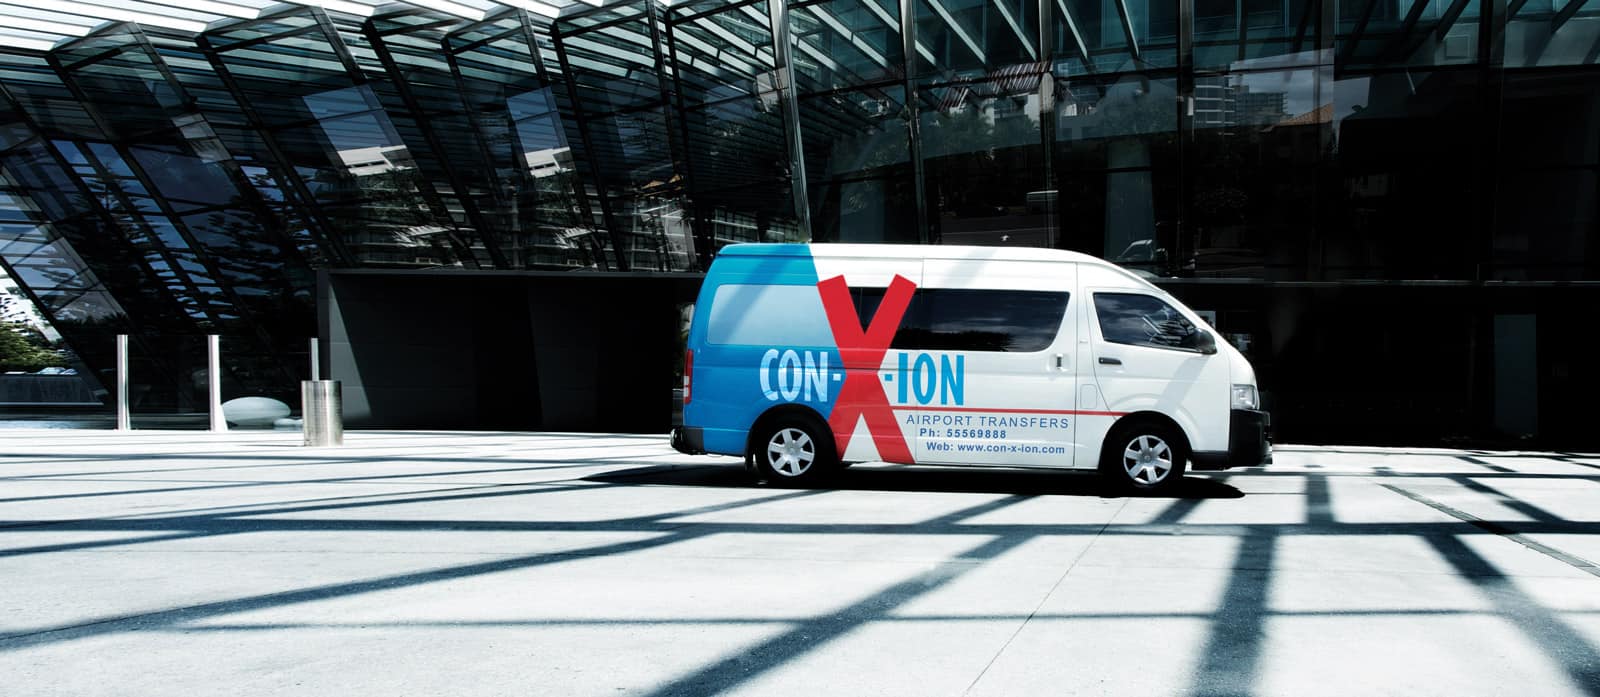 Conxion Airport Transfer Van